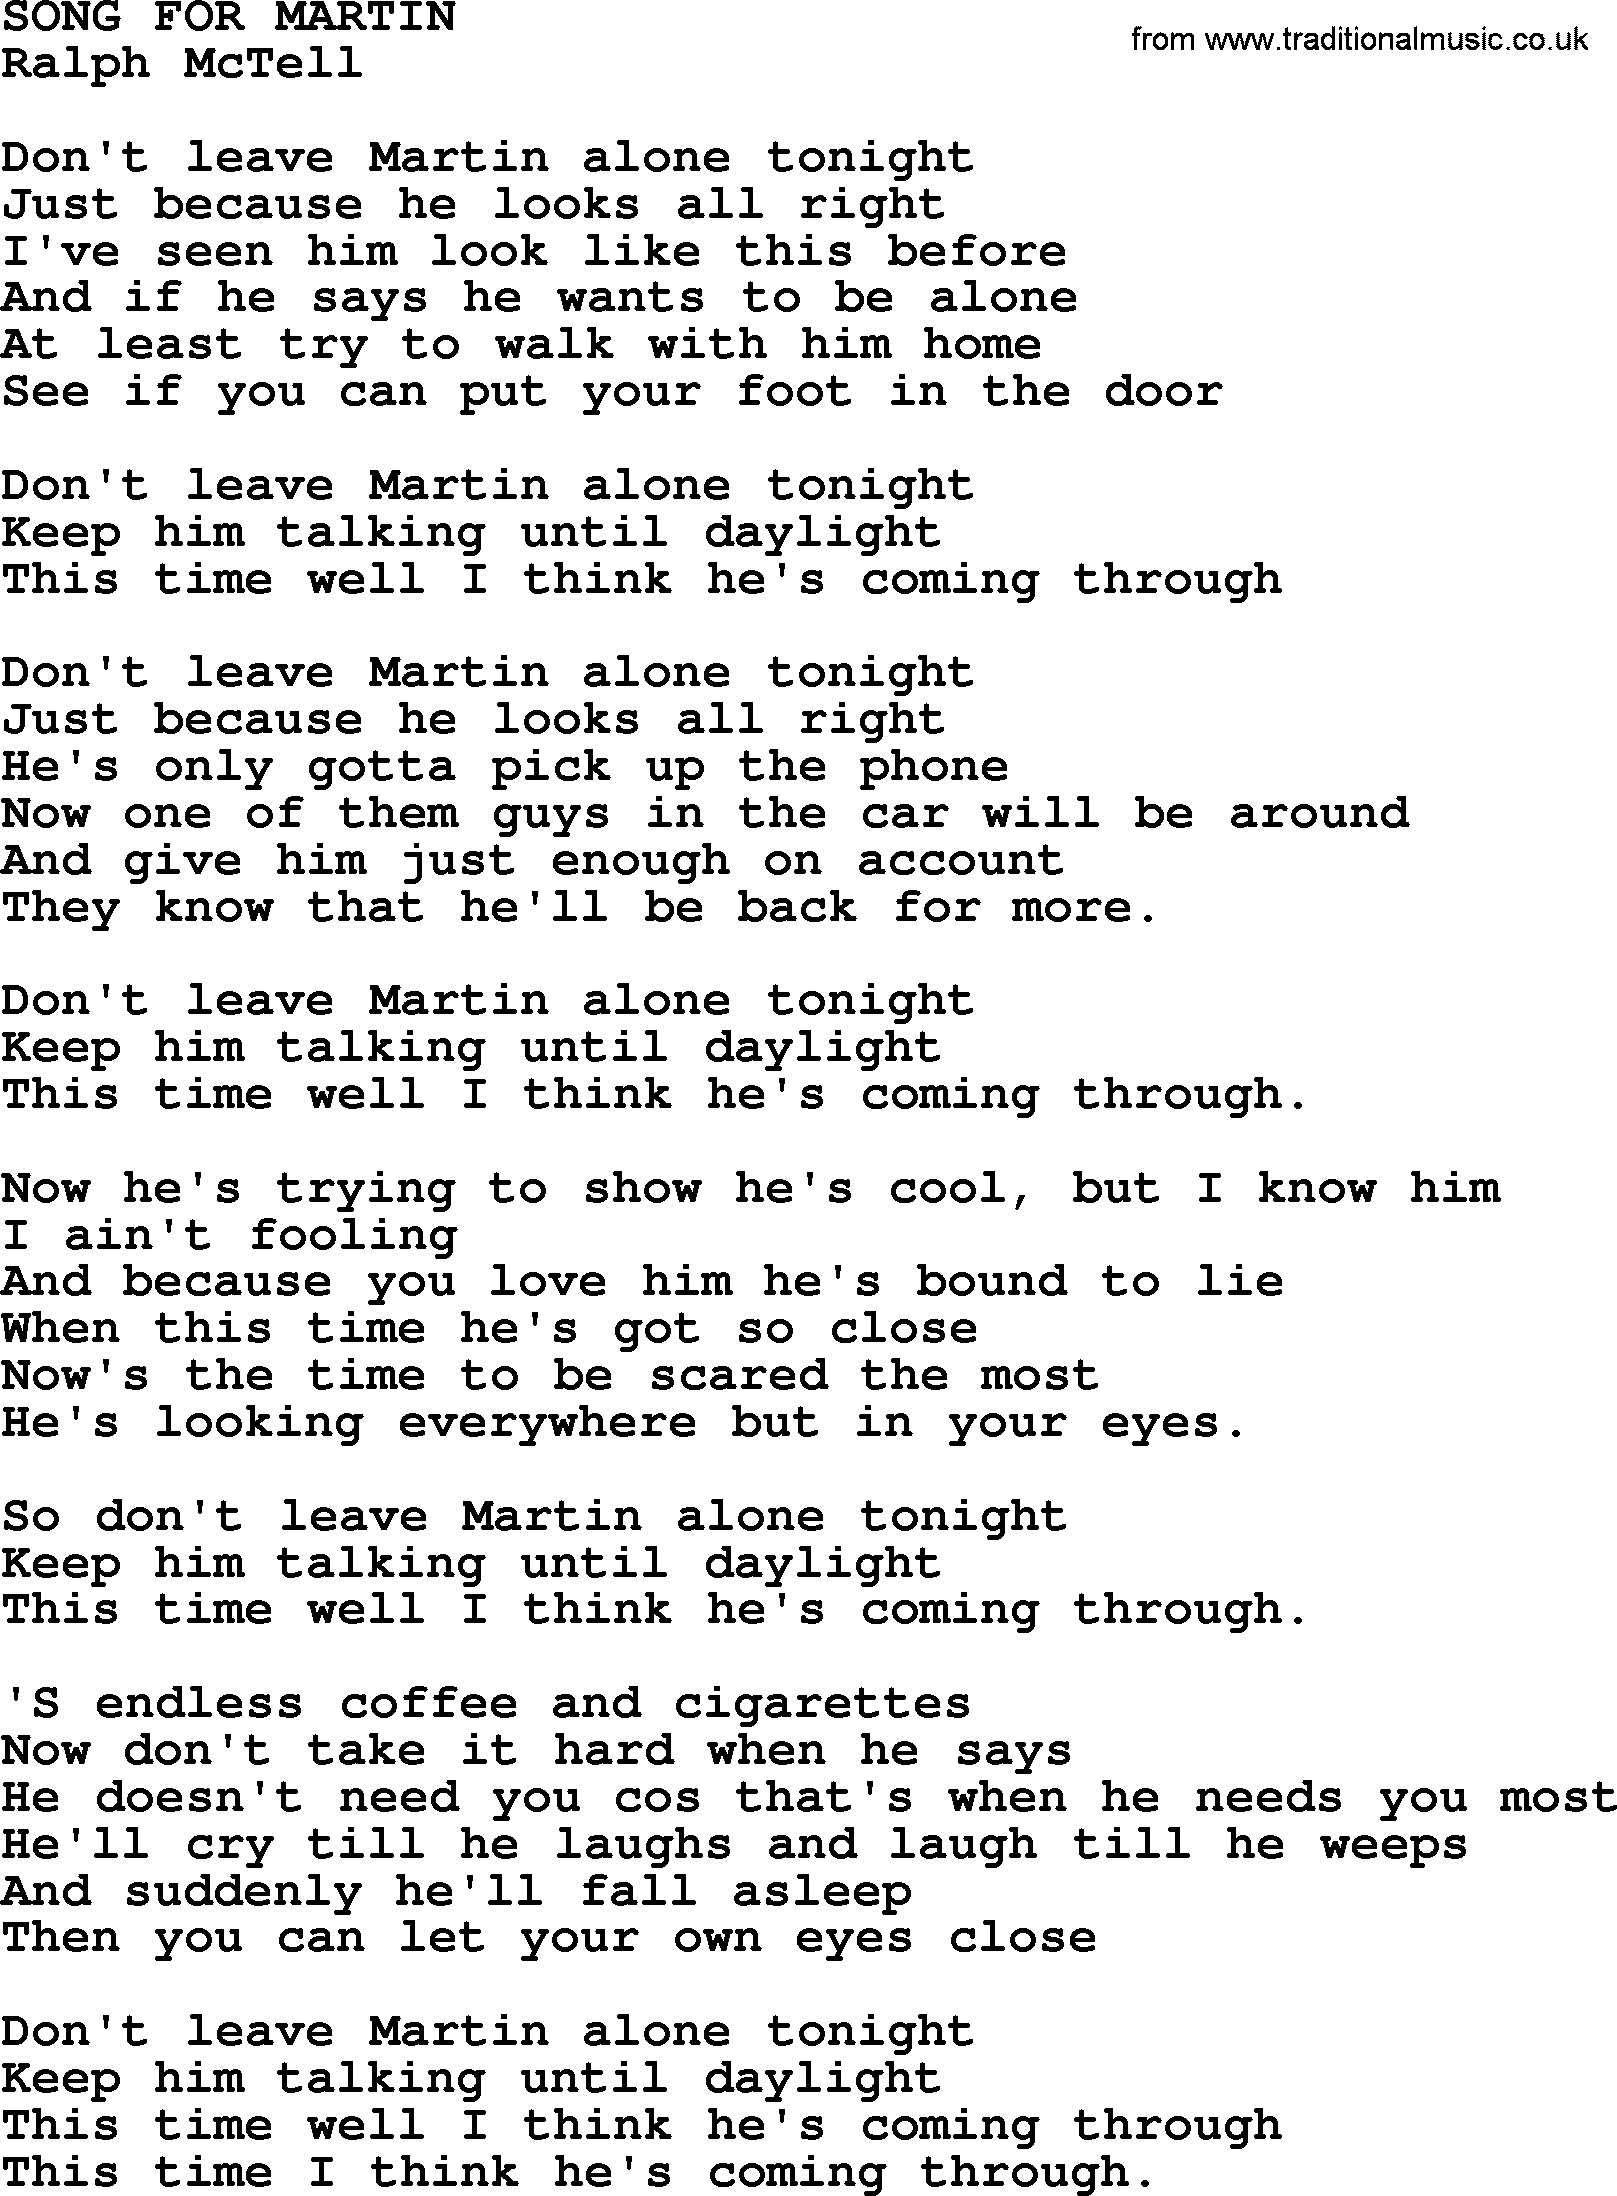 Ralph McTell Song: Song For Martin, lyrics